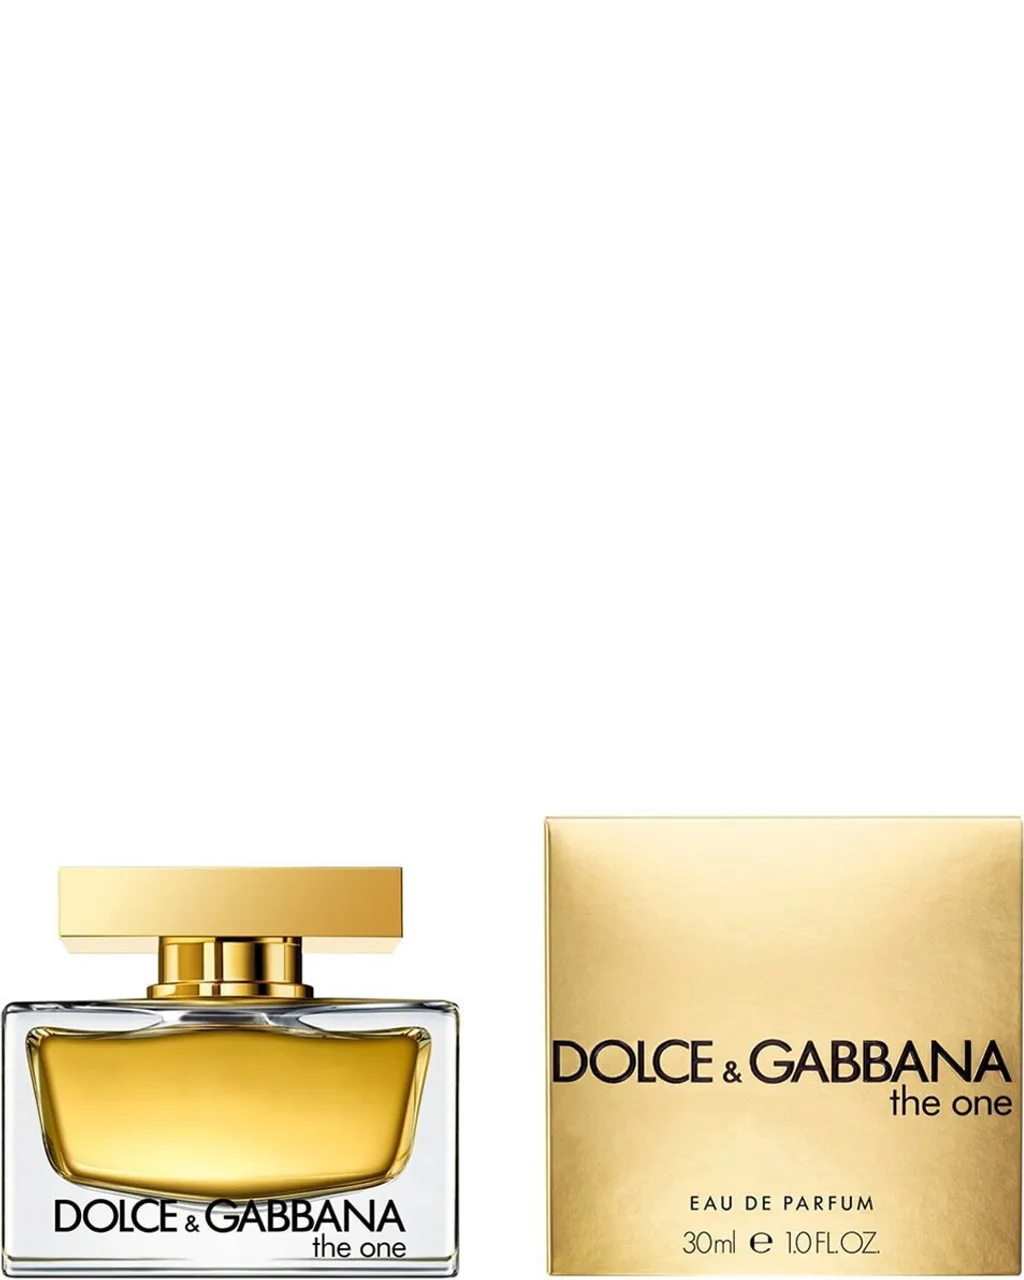 Dolce & Gabbana The One EAU DE PARFUM 30 ML